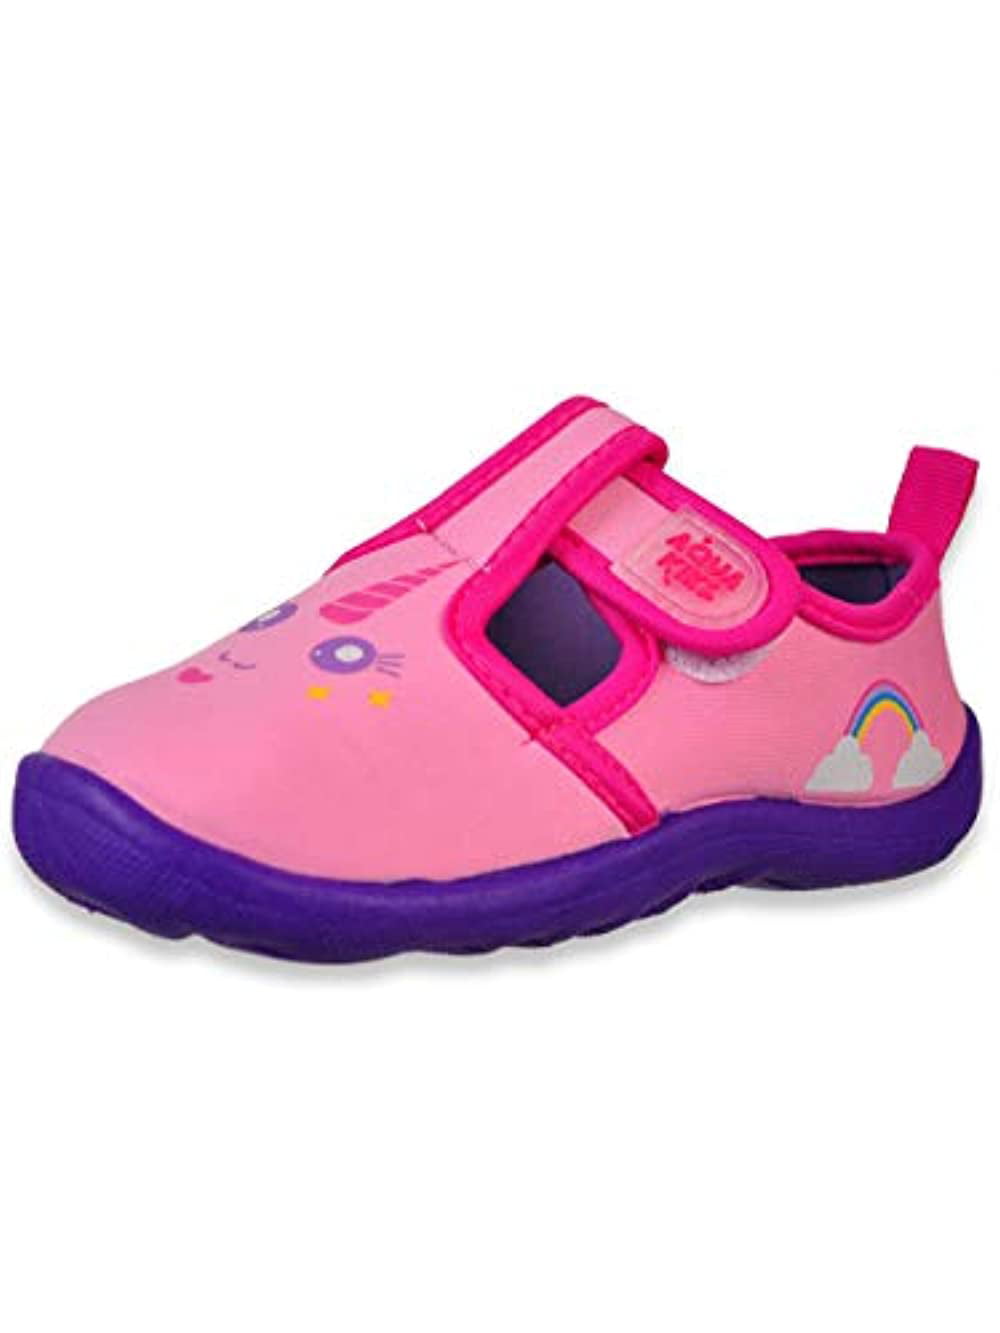 Kids Waterproof Sandals Aquakiks Water Aqua Shoes for Boys /& Girls